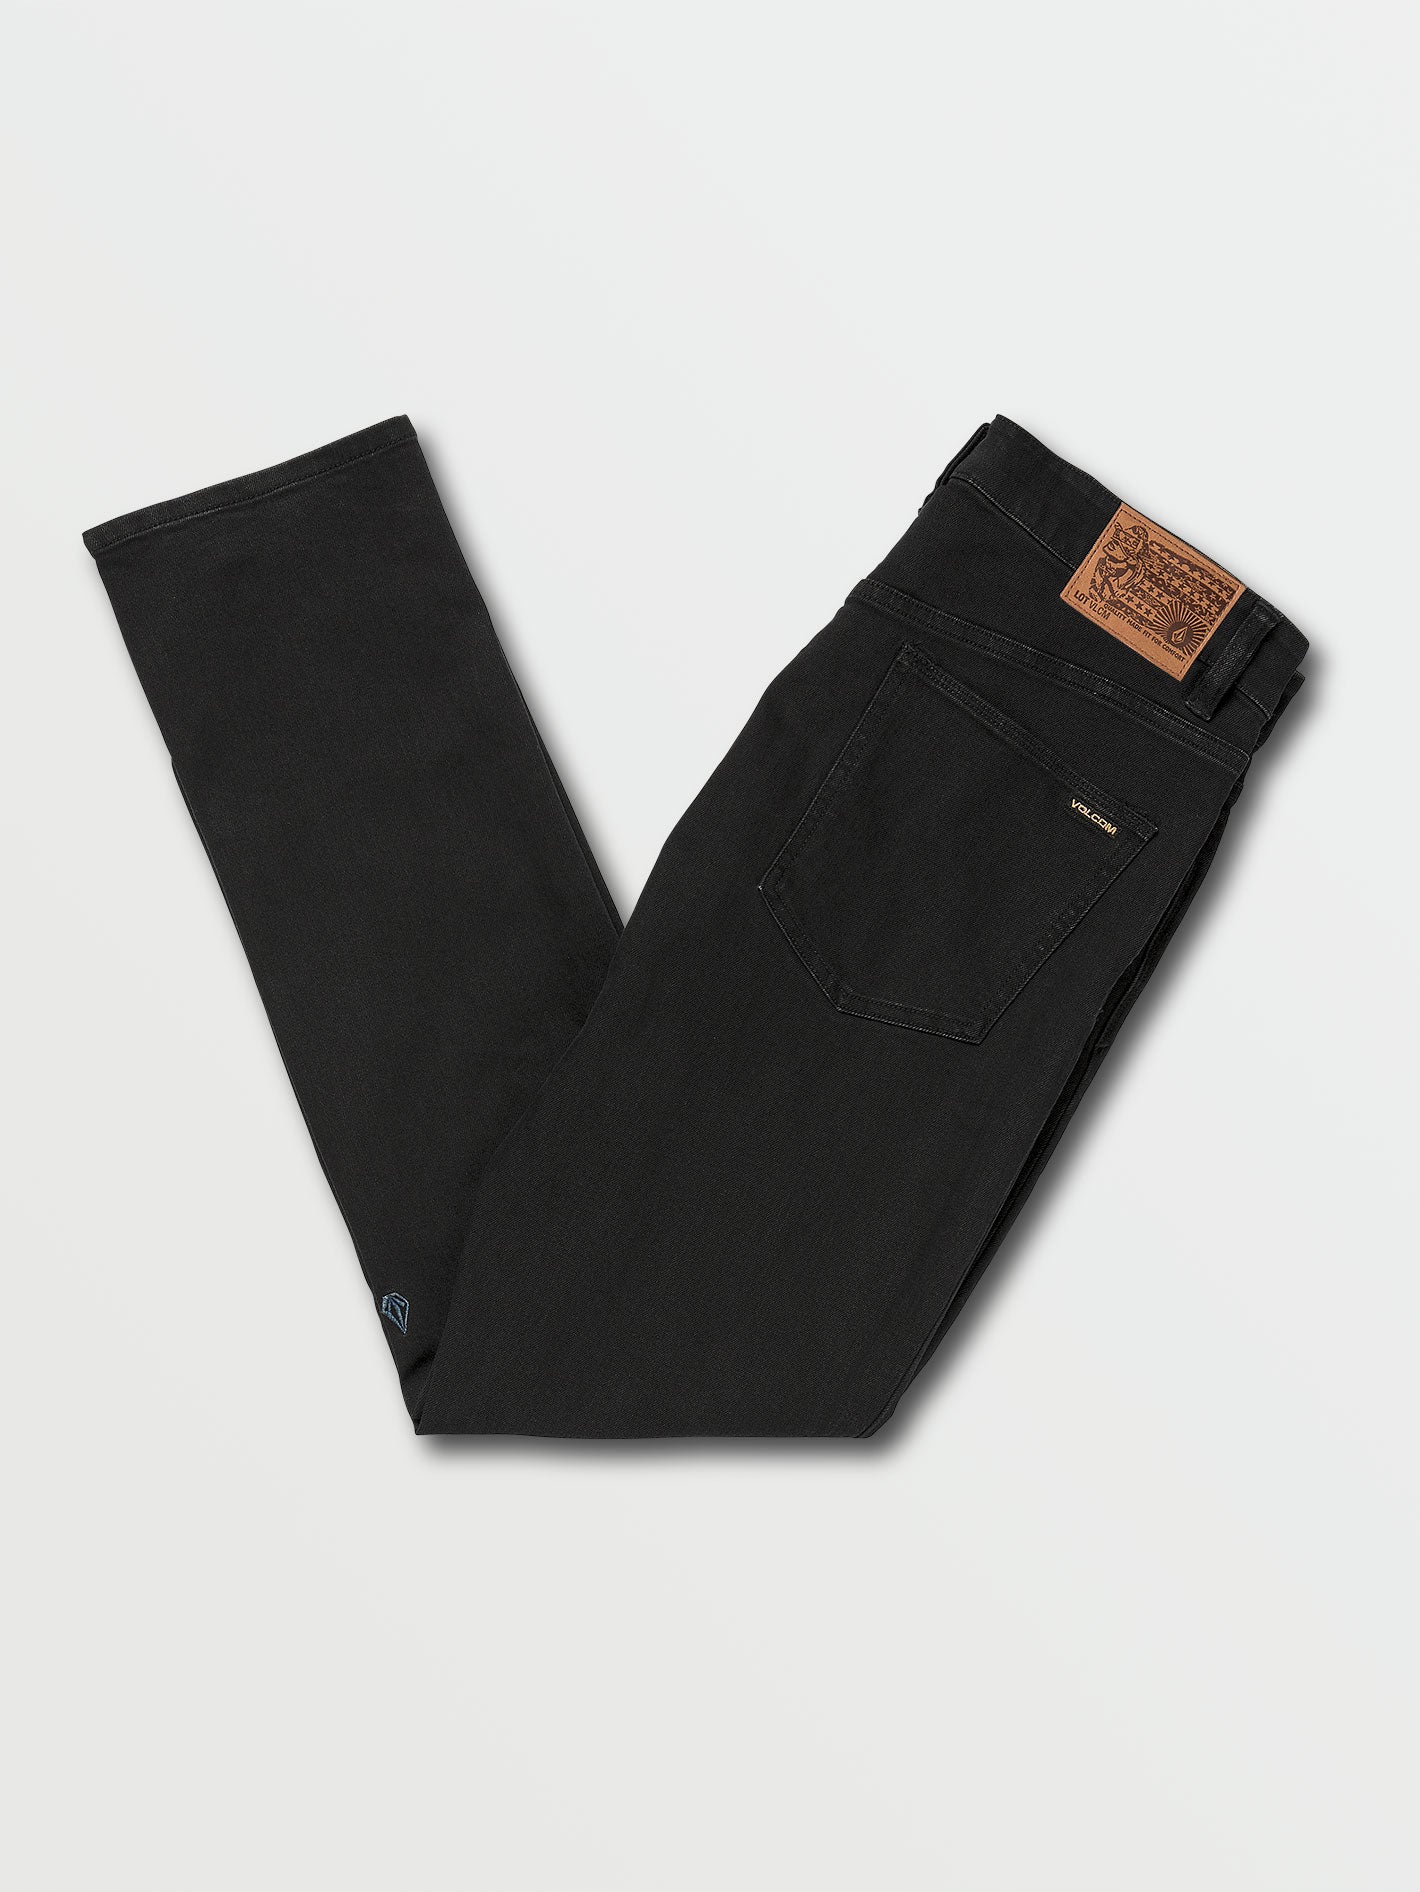 Vorta Black Out Jeans - Enzyme Wash Men's Black Slim Fit Jeans – Volcom US